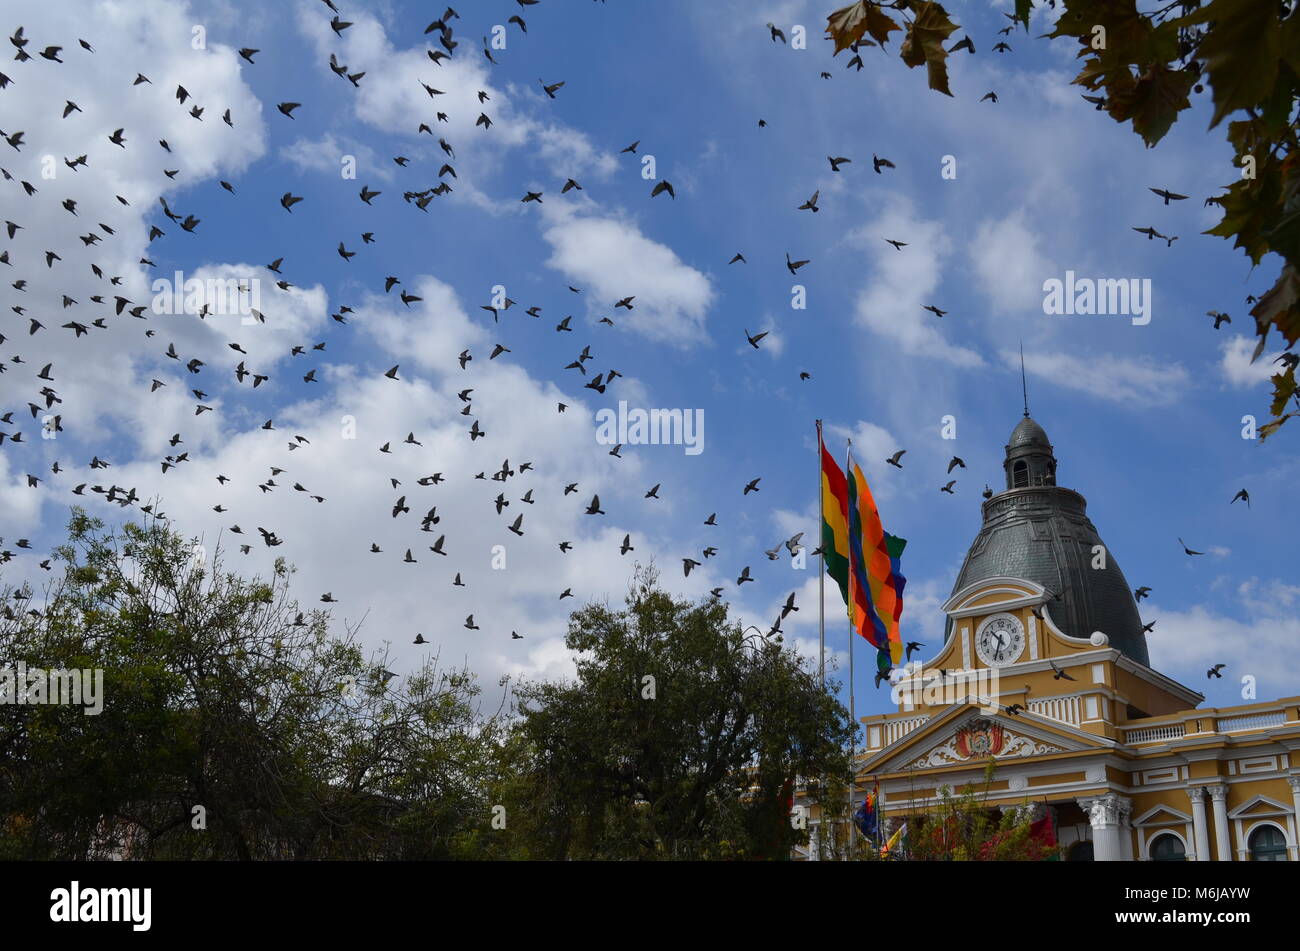 Birds flying over Plaza Murillo Square in La Paz, Palacio de Gobierno, Bolivia Stock Photo